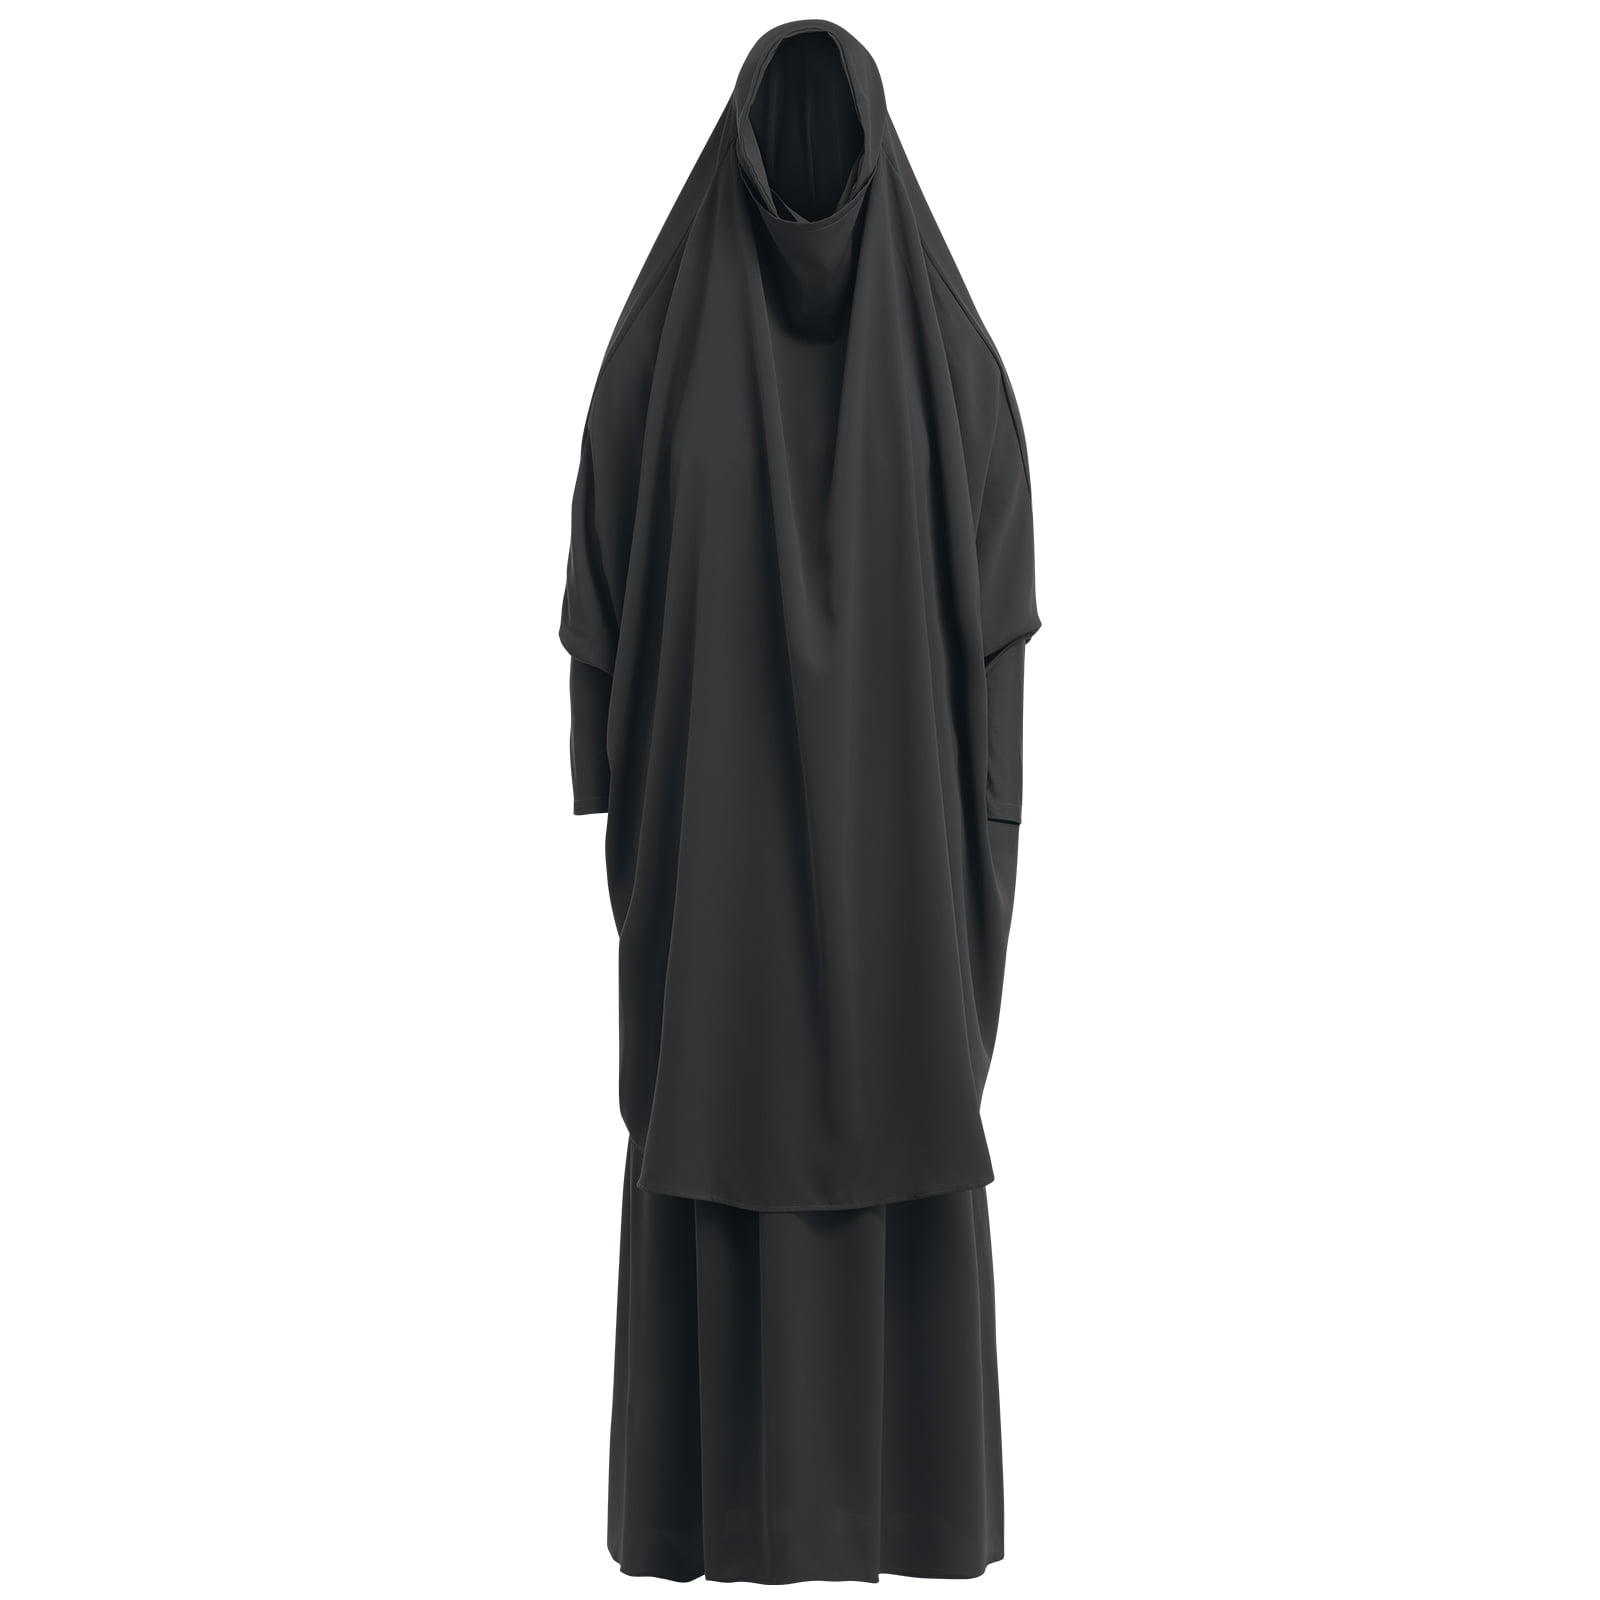 IBTOM CASTLE Women's Muslim Prayer Dress Hijab Scarf Eid Prayer Jilbab ...